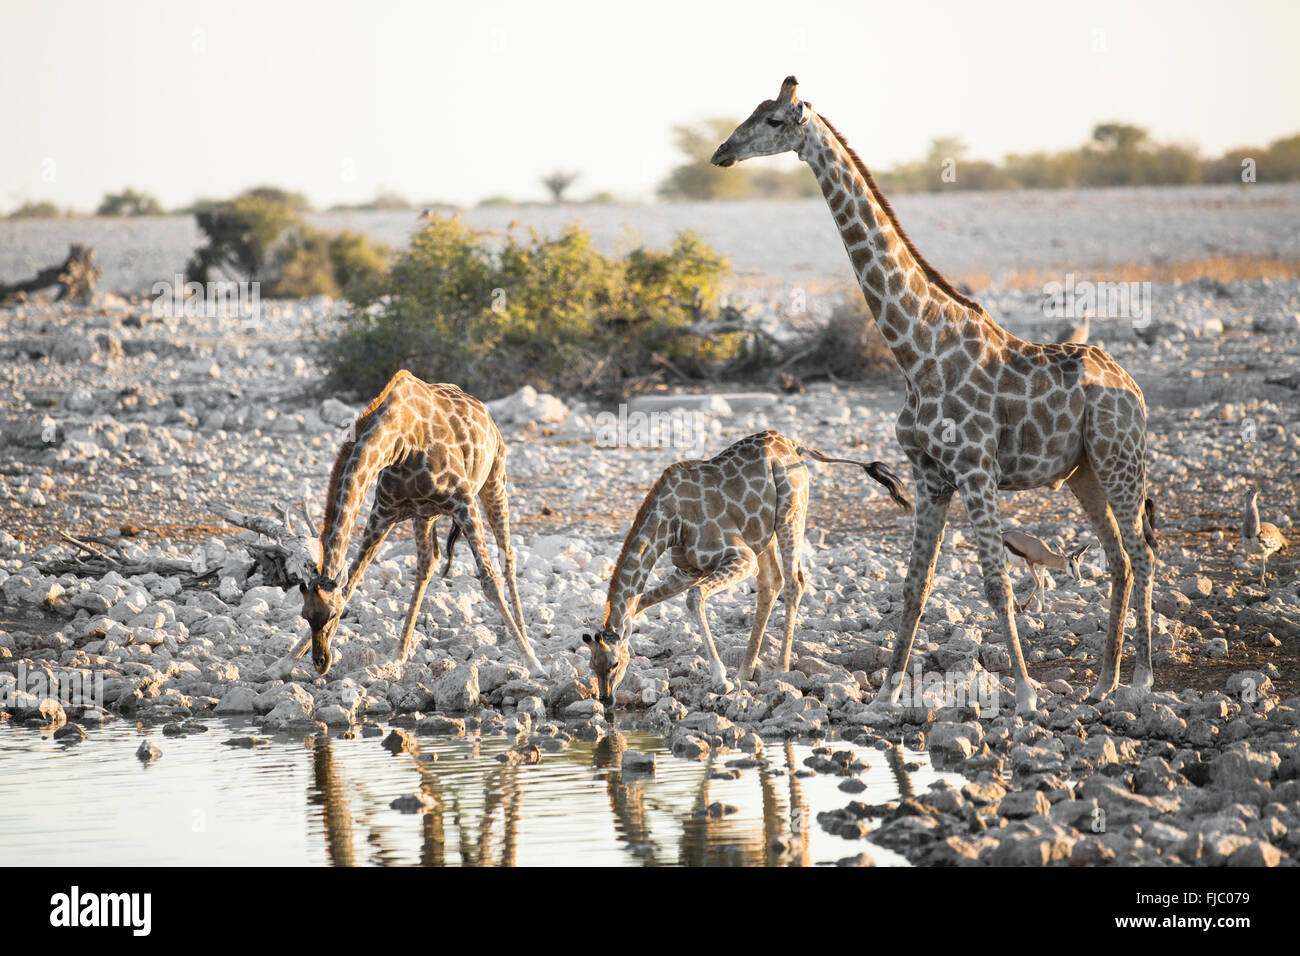 Giraffe in Etosha National Park. Stock Photo